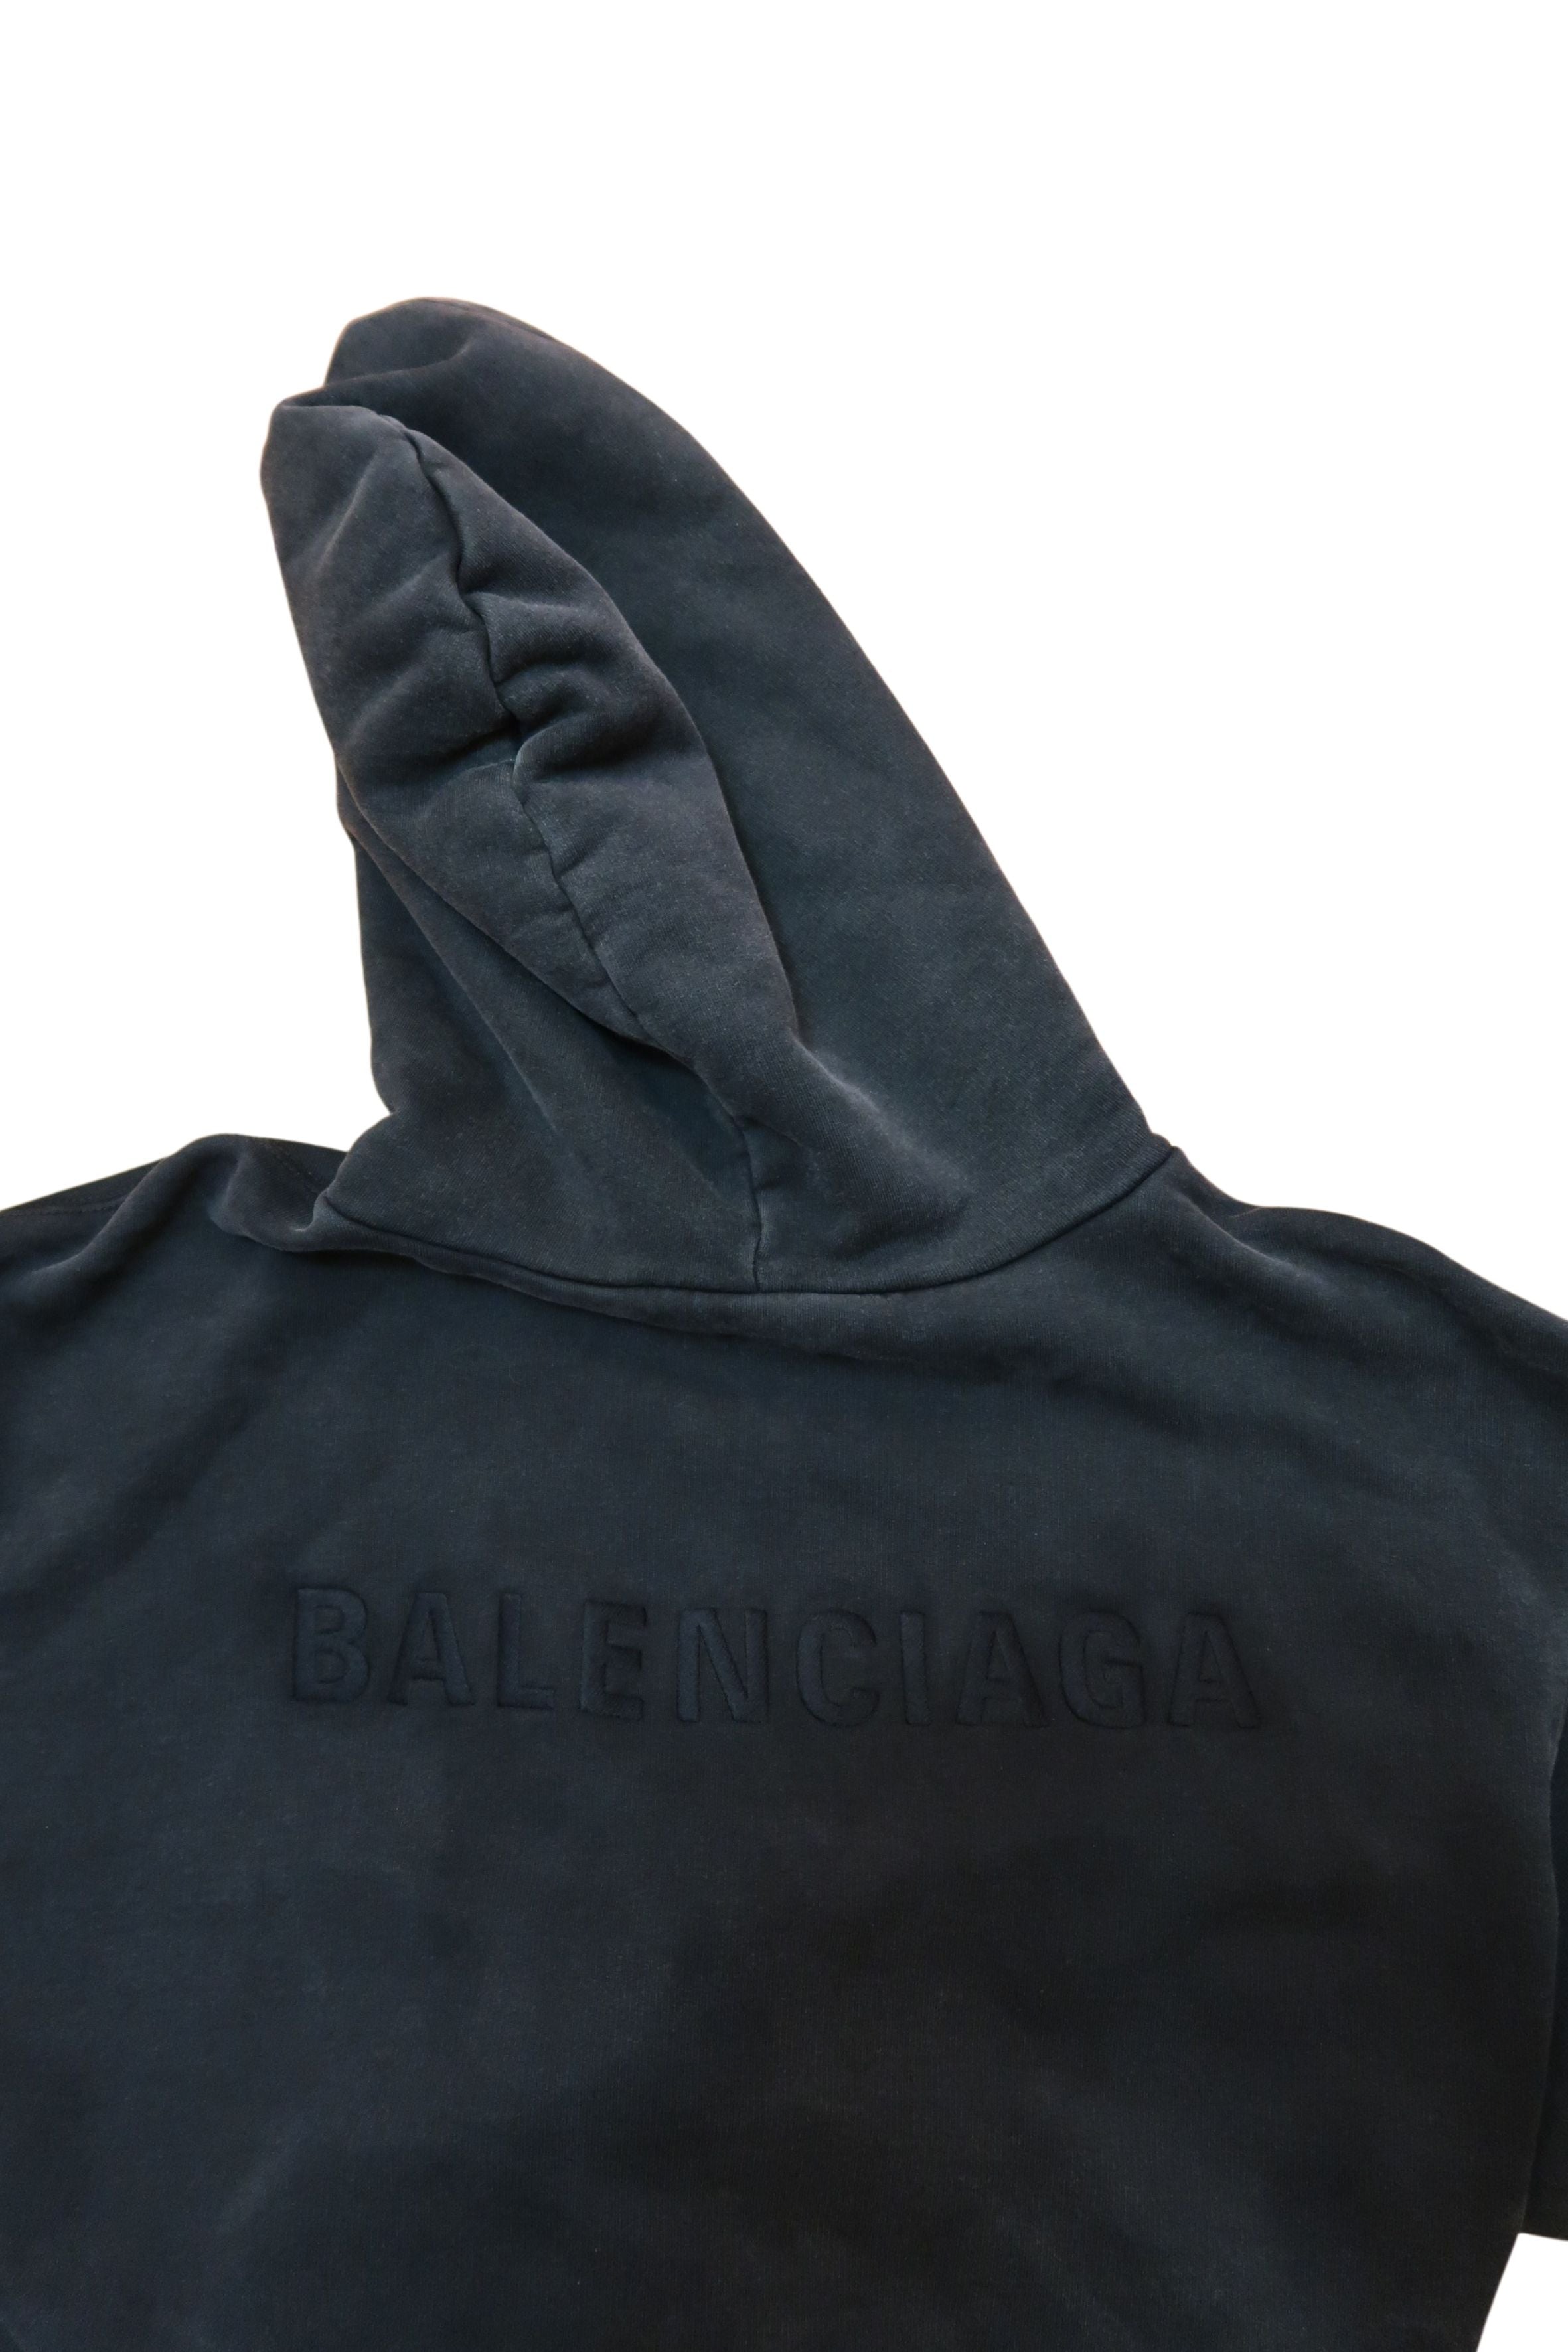 Balenciaga Black Embroidered Logo Hoodie (Fits like M-L)